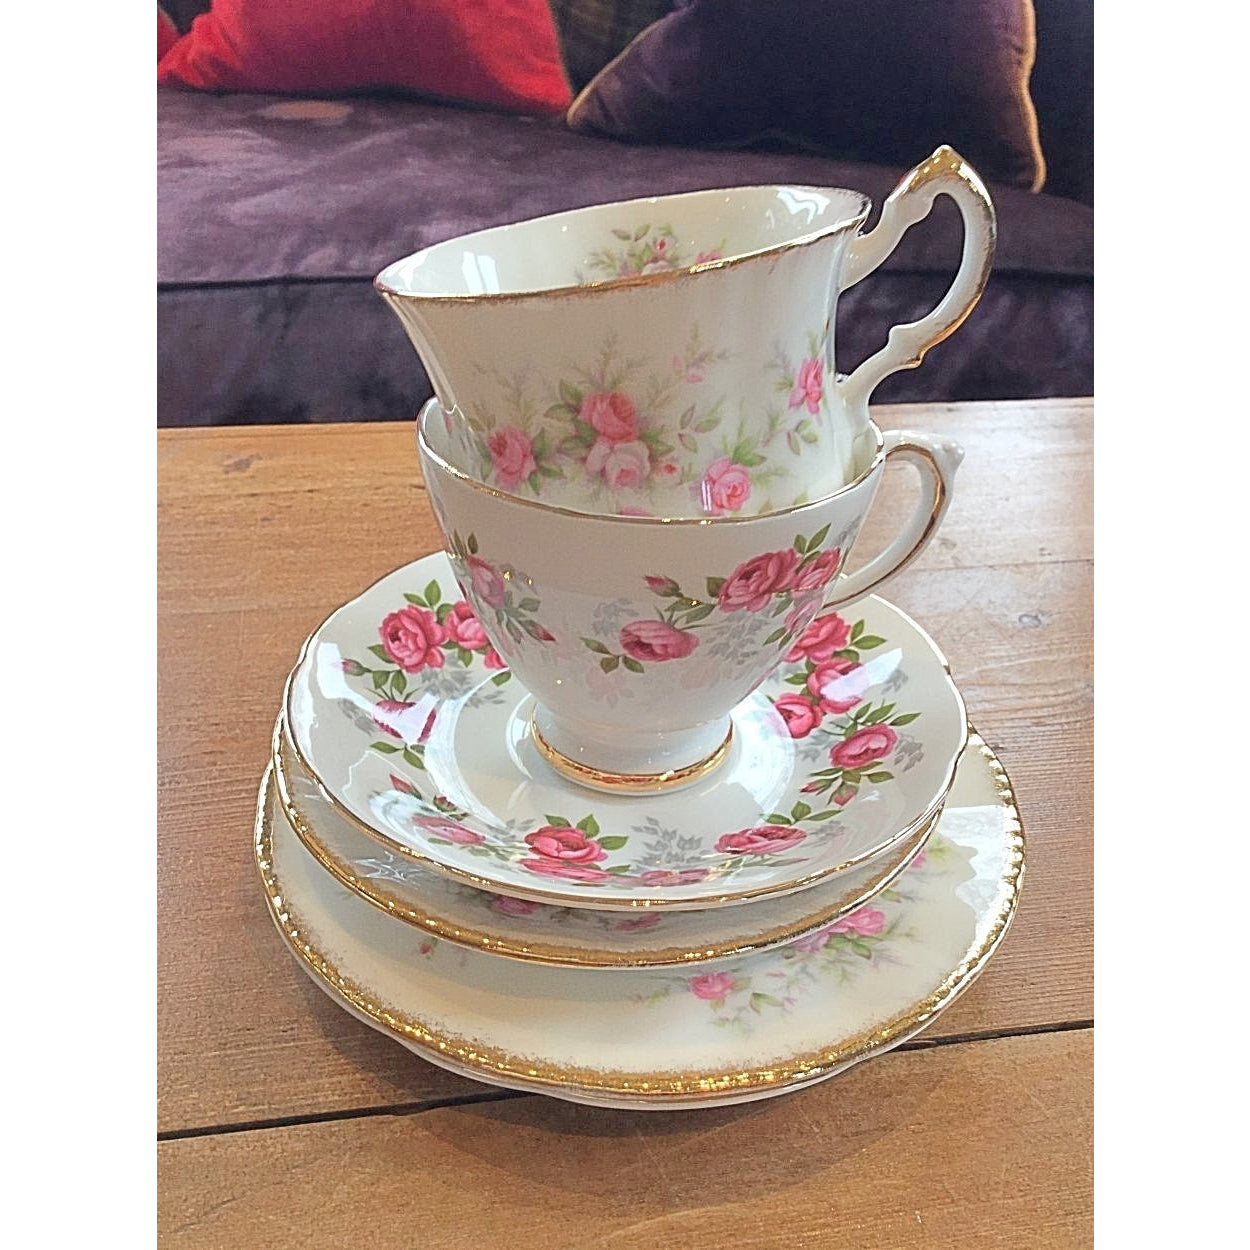 Fine bone china vintage english tea cups and saucers